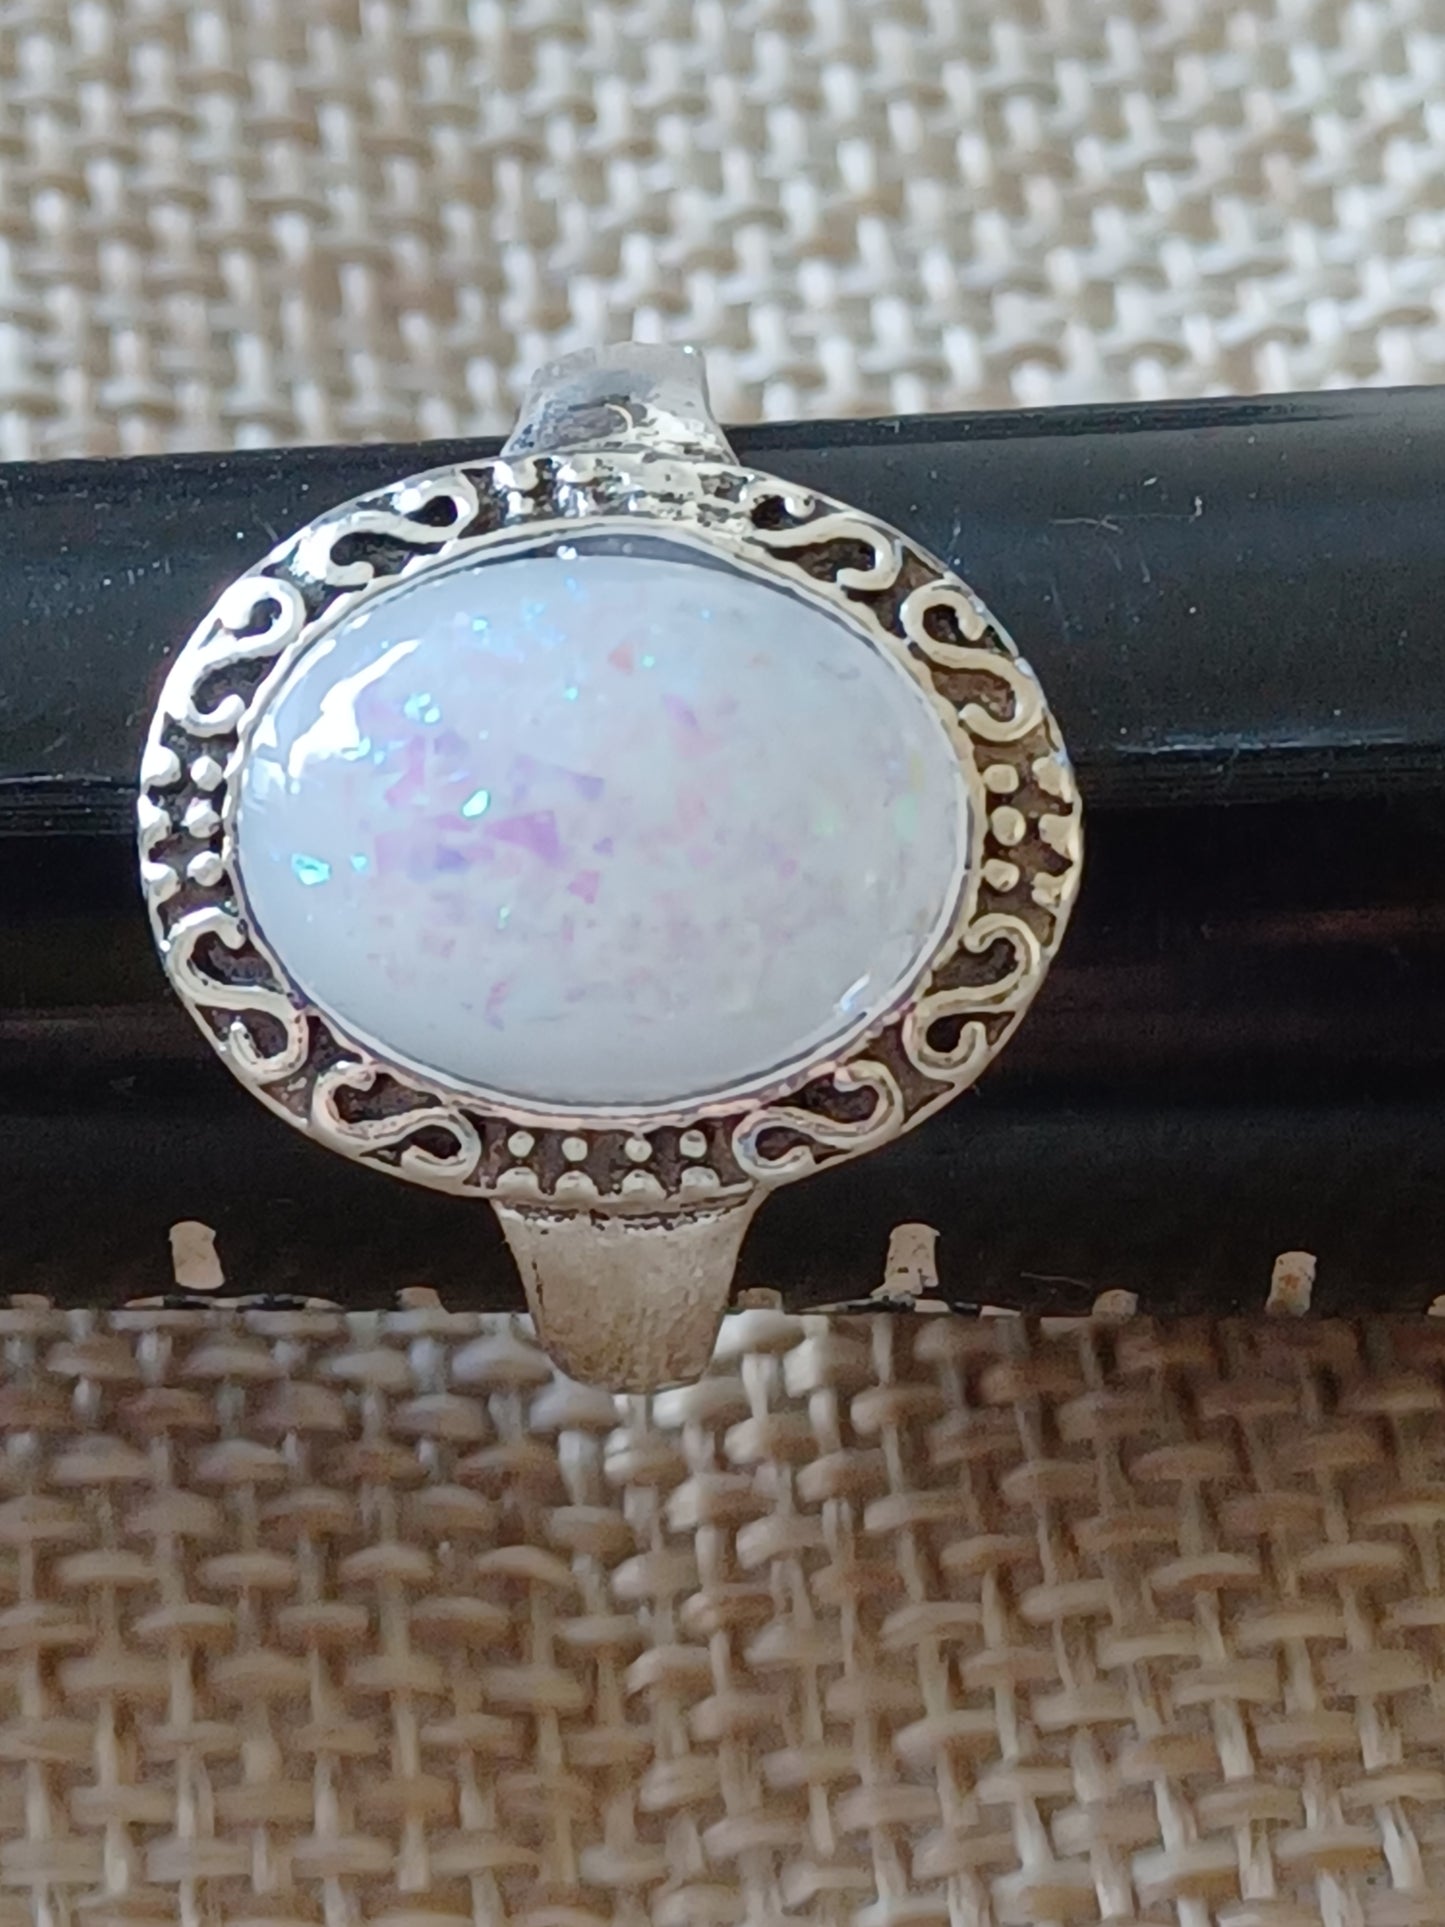 Oval Fire Opal Ring - Size 8 1/2